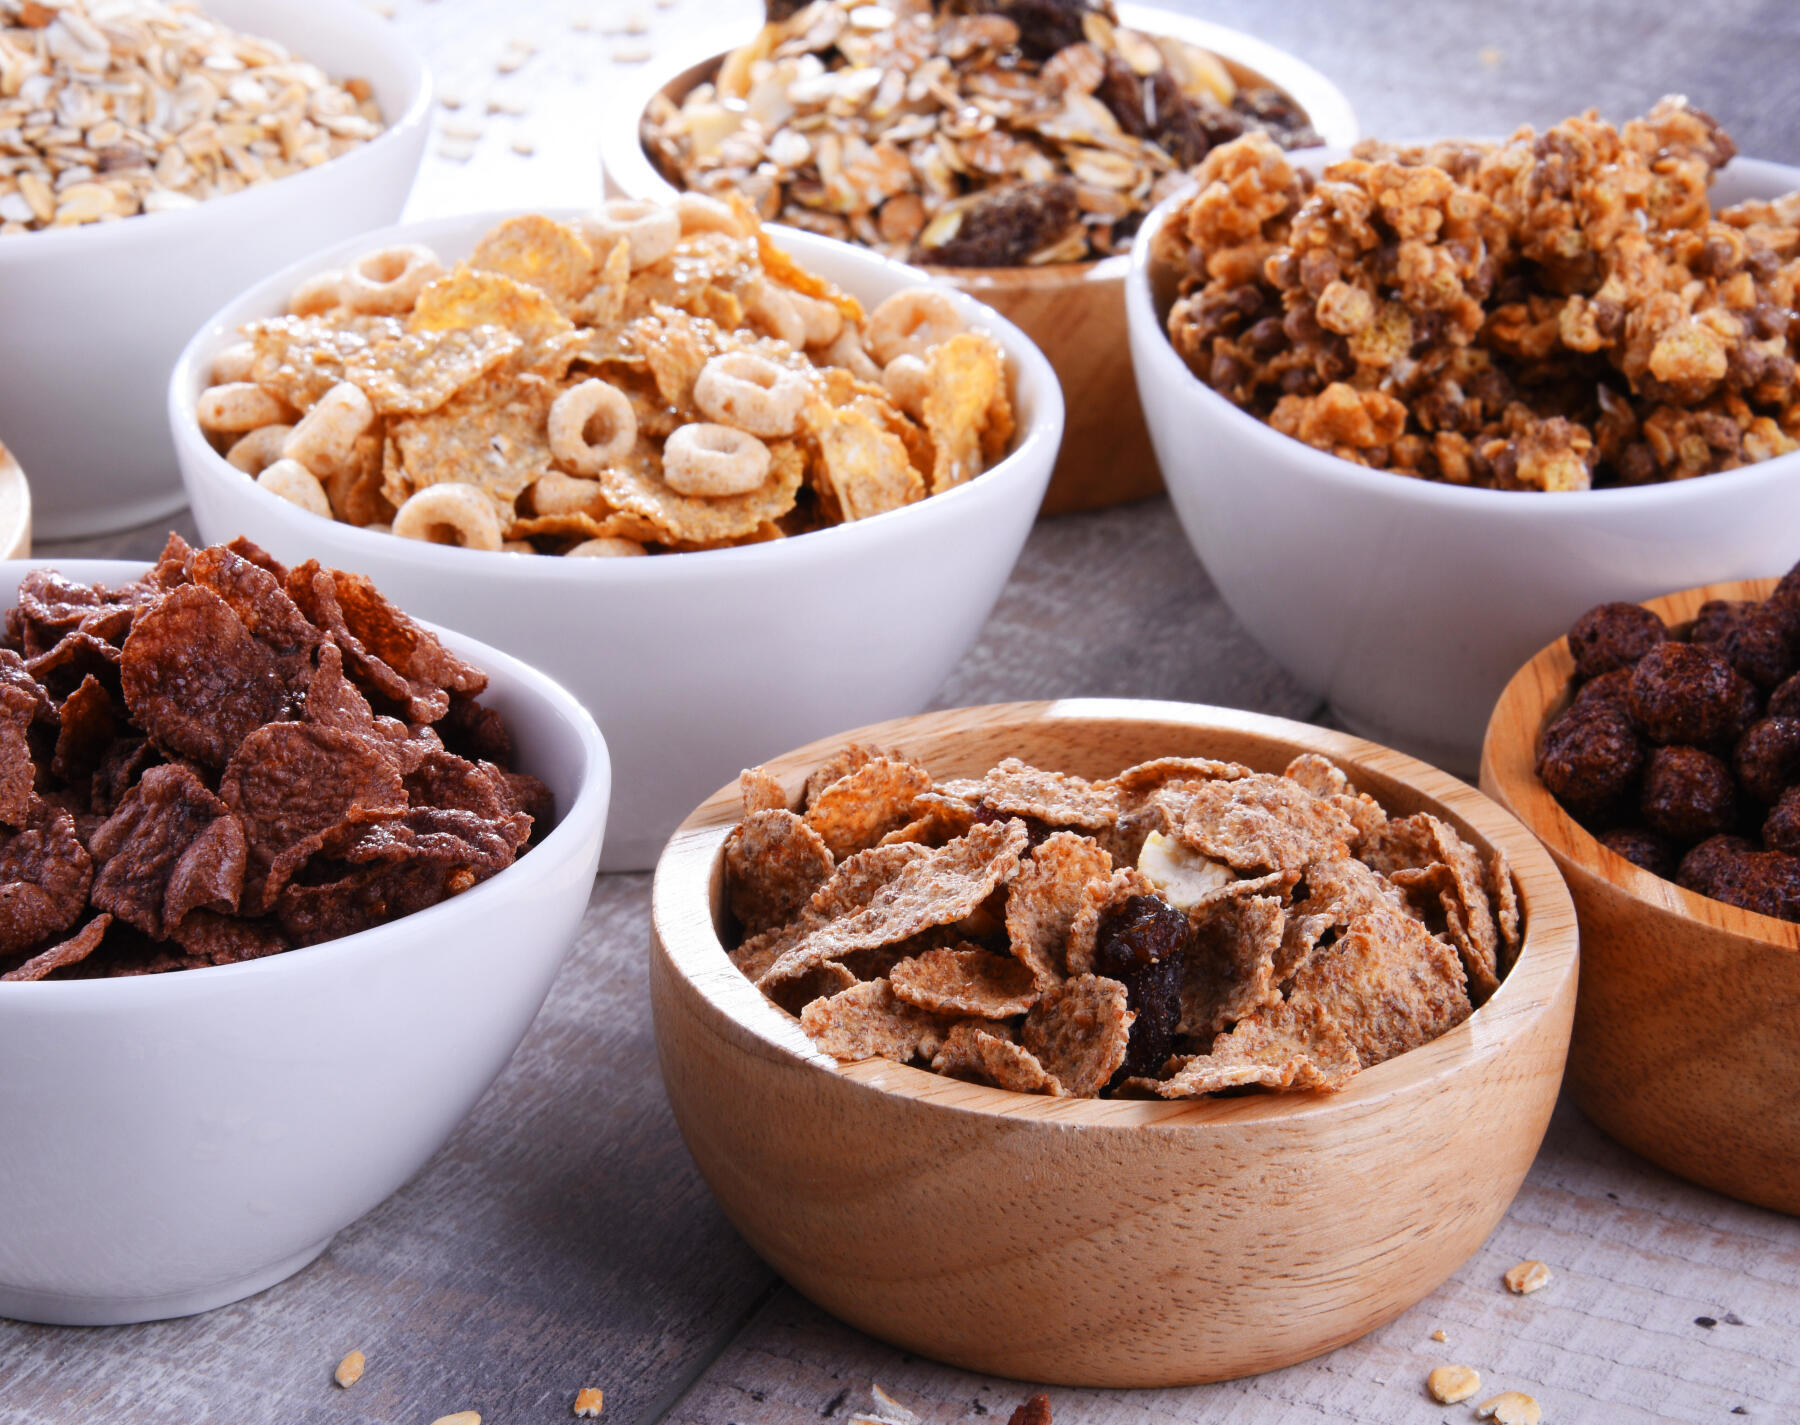 Fake health foods: cereals